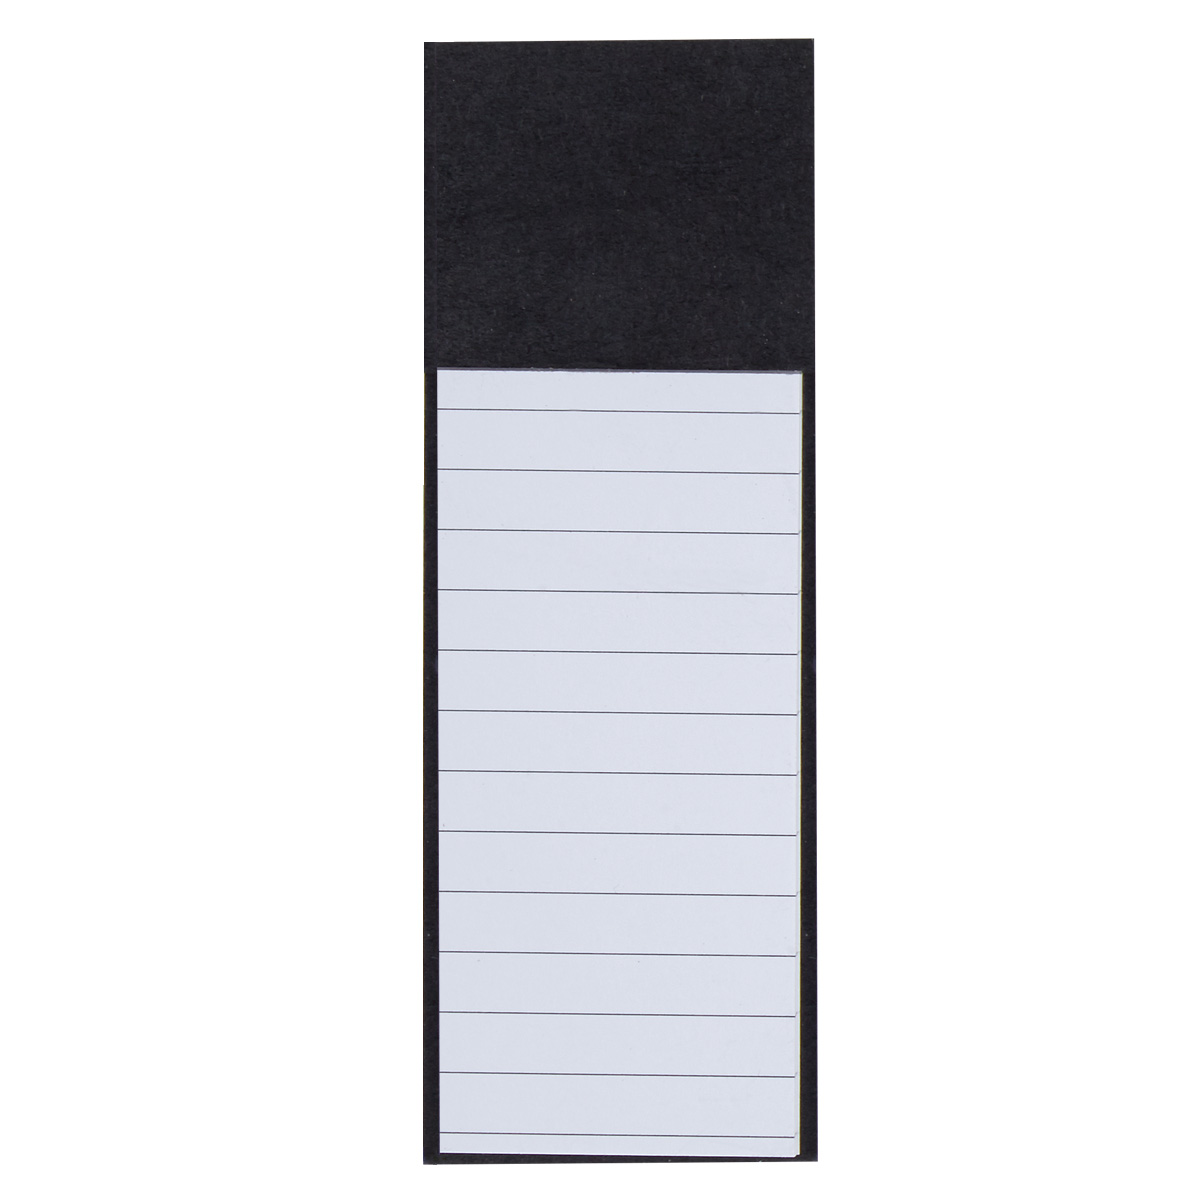 Black Magnetic Note Pad